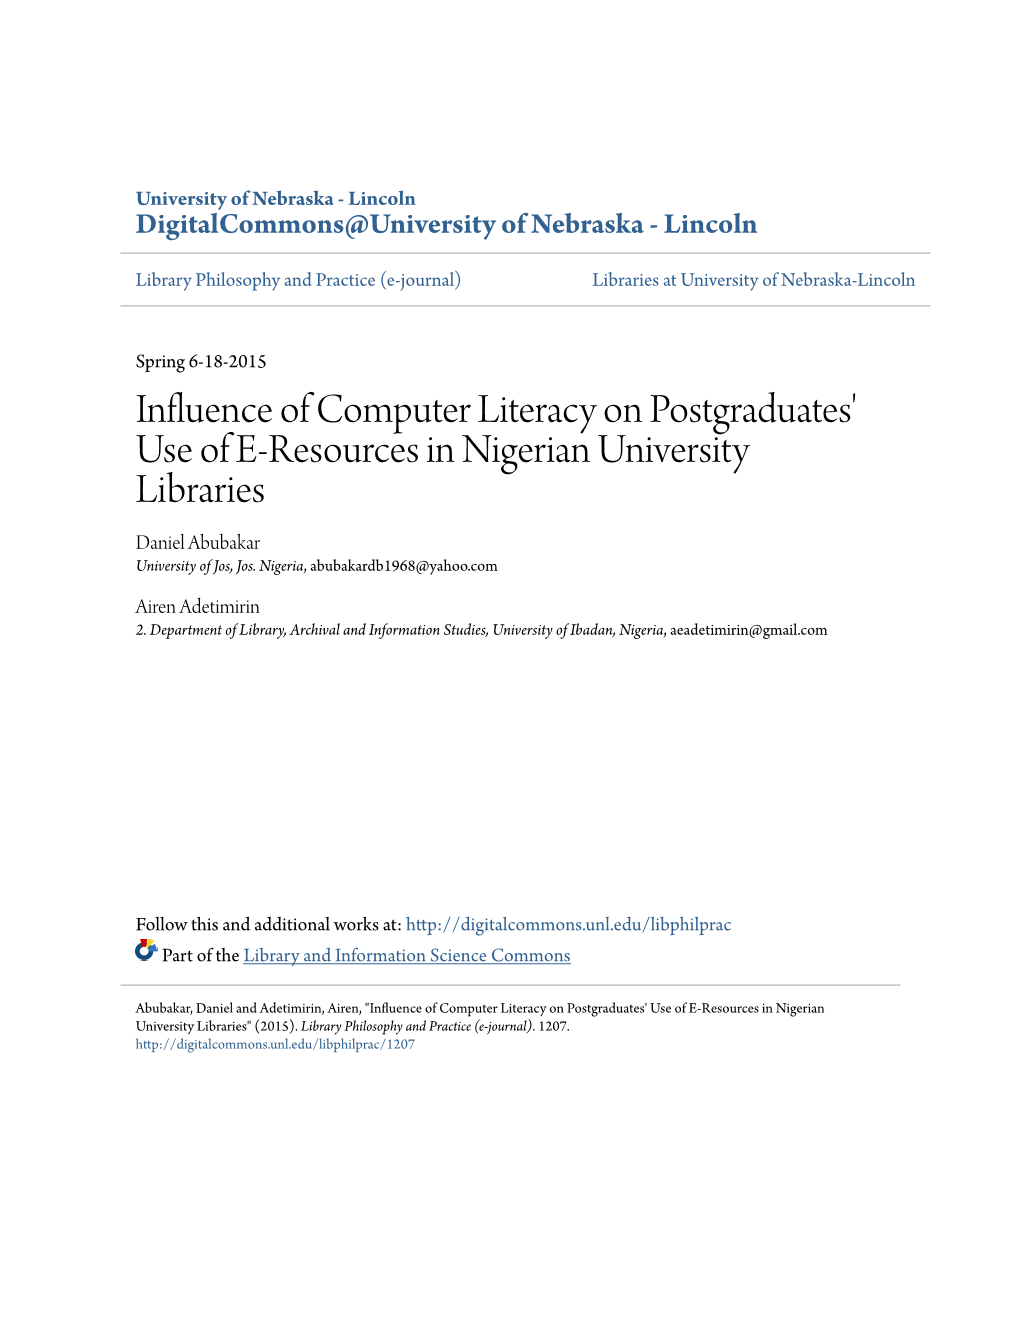 Influence of Computer Literacy on Postgraduates' Use of E-Resources in Nigerian University Libraries Daniel Abubakar University of Jos, Jos